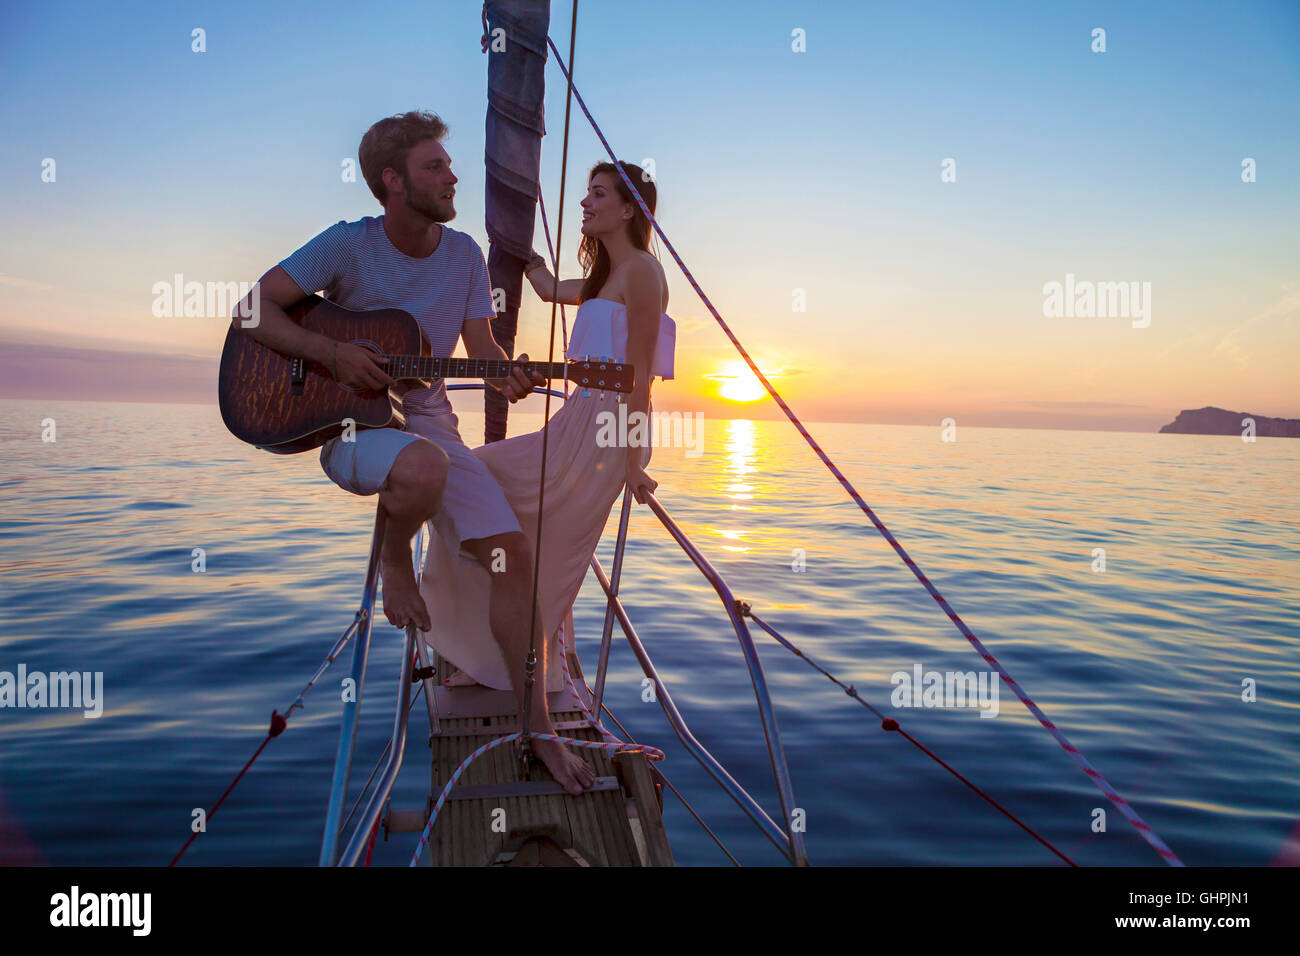 Young man playing guitar on sailboat at sunset Stock Photo